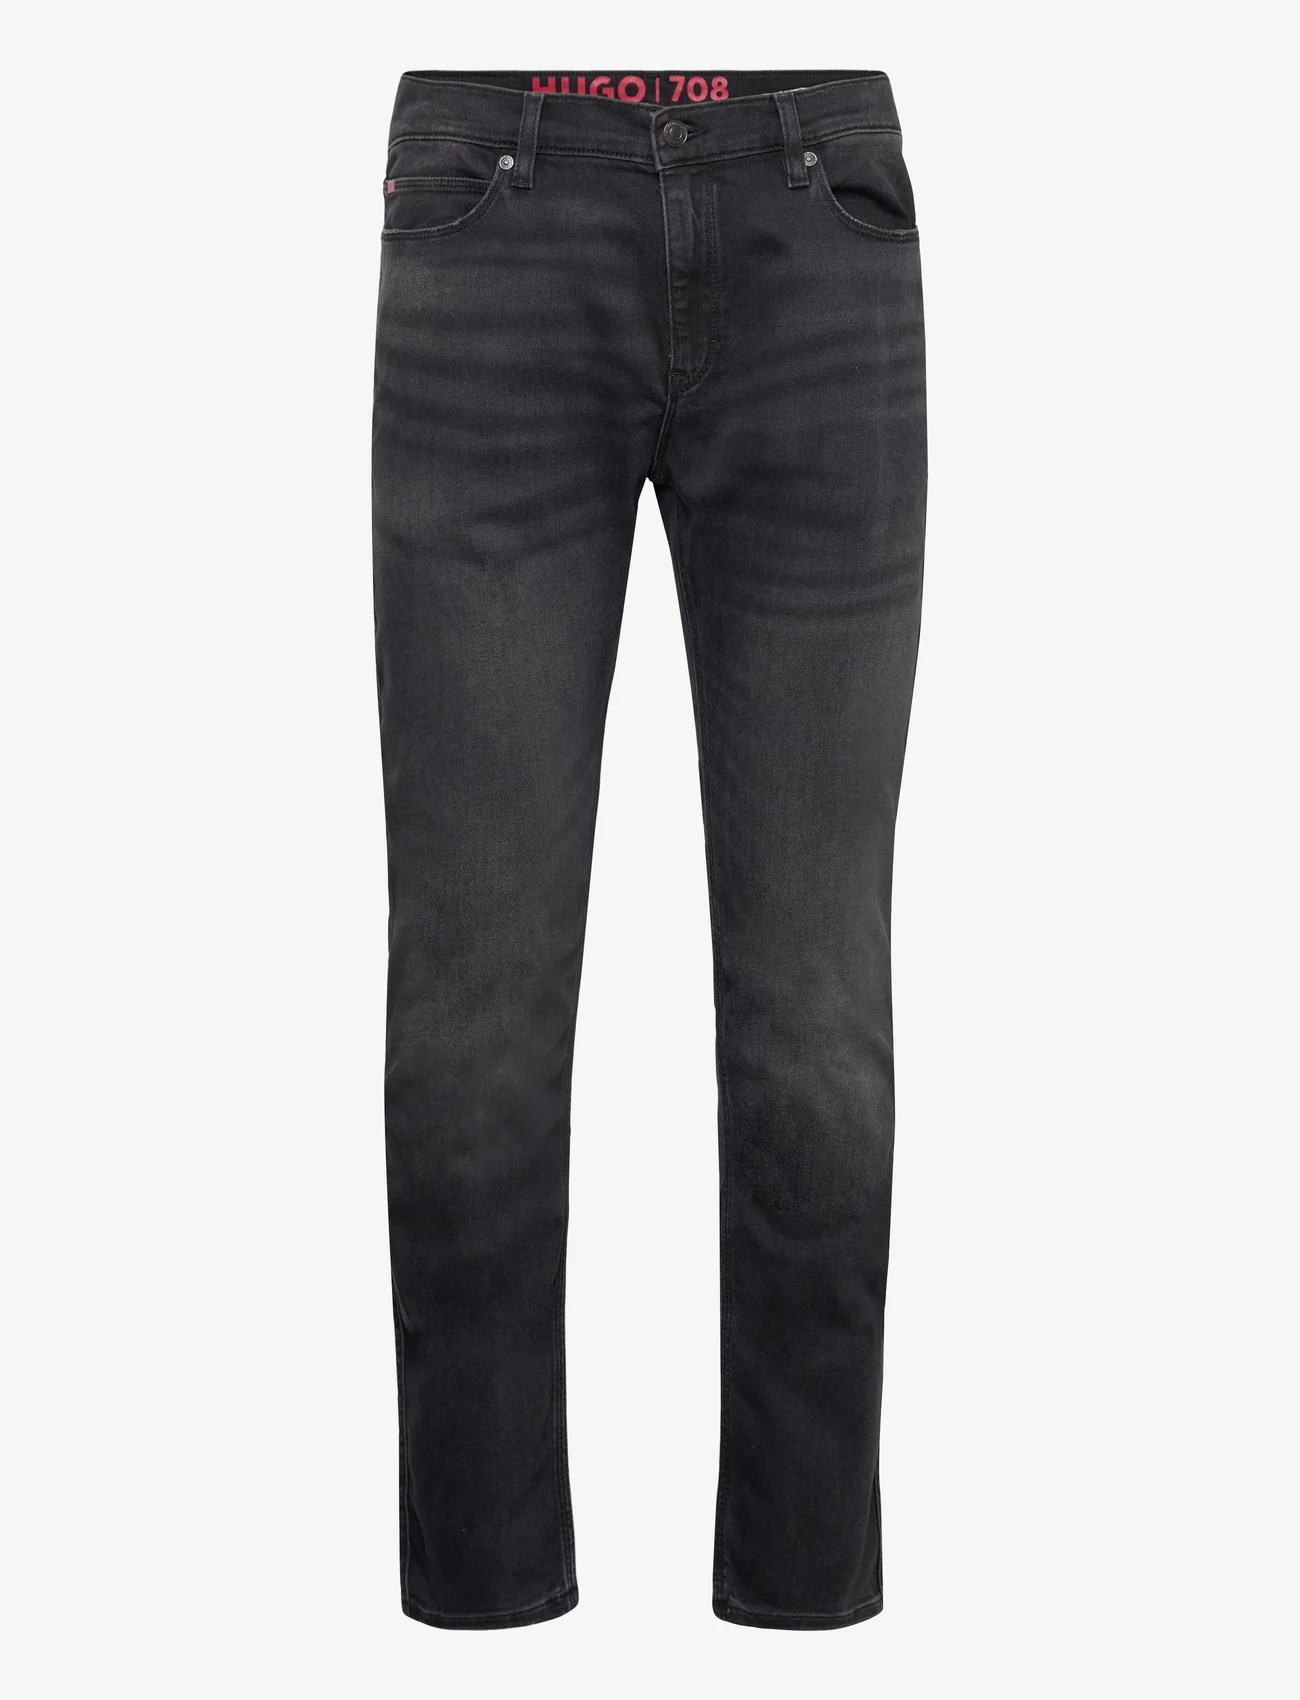 HUGO - HUGO 708 - slim jeans - dark grey - 0